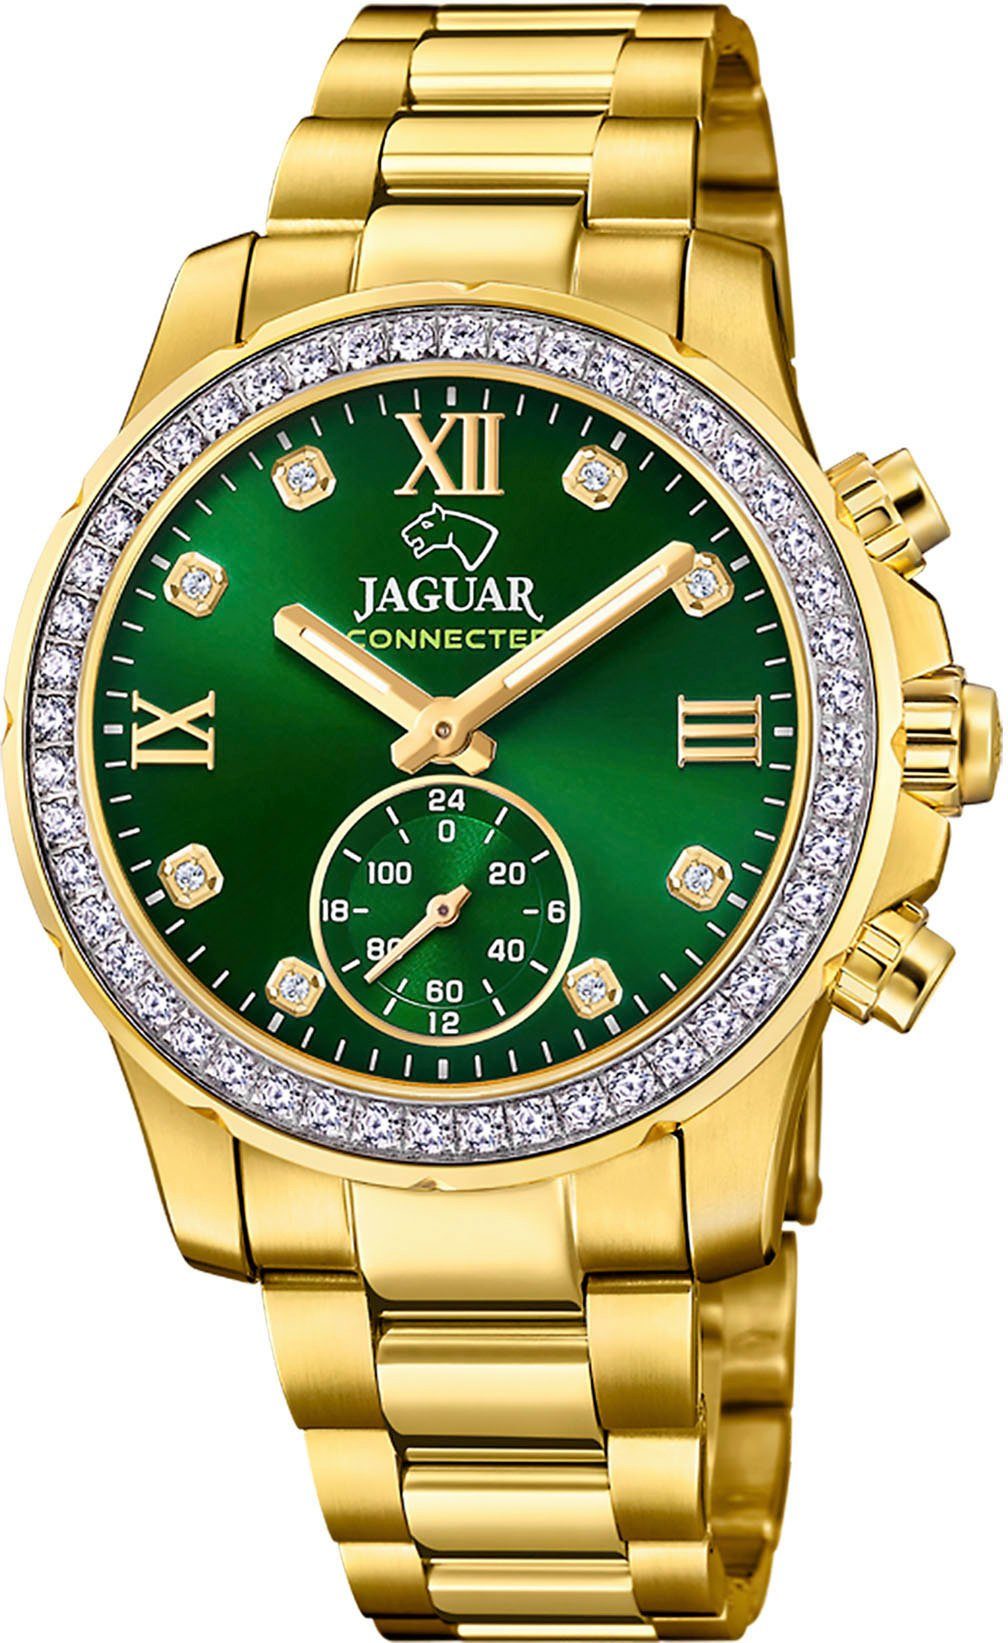 Jaguar Chronograph Connected, J983/5, Armbanduhr, Damenuhr, Saphirglas, Stoppfunktion, Swiss Made